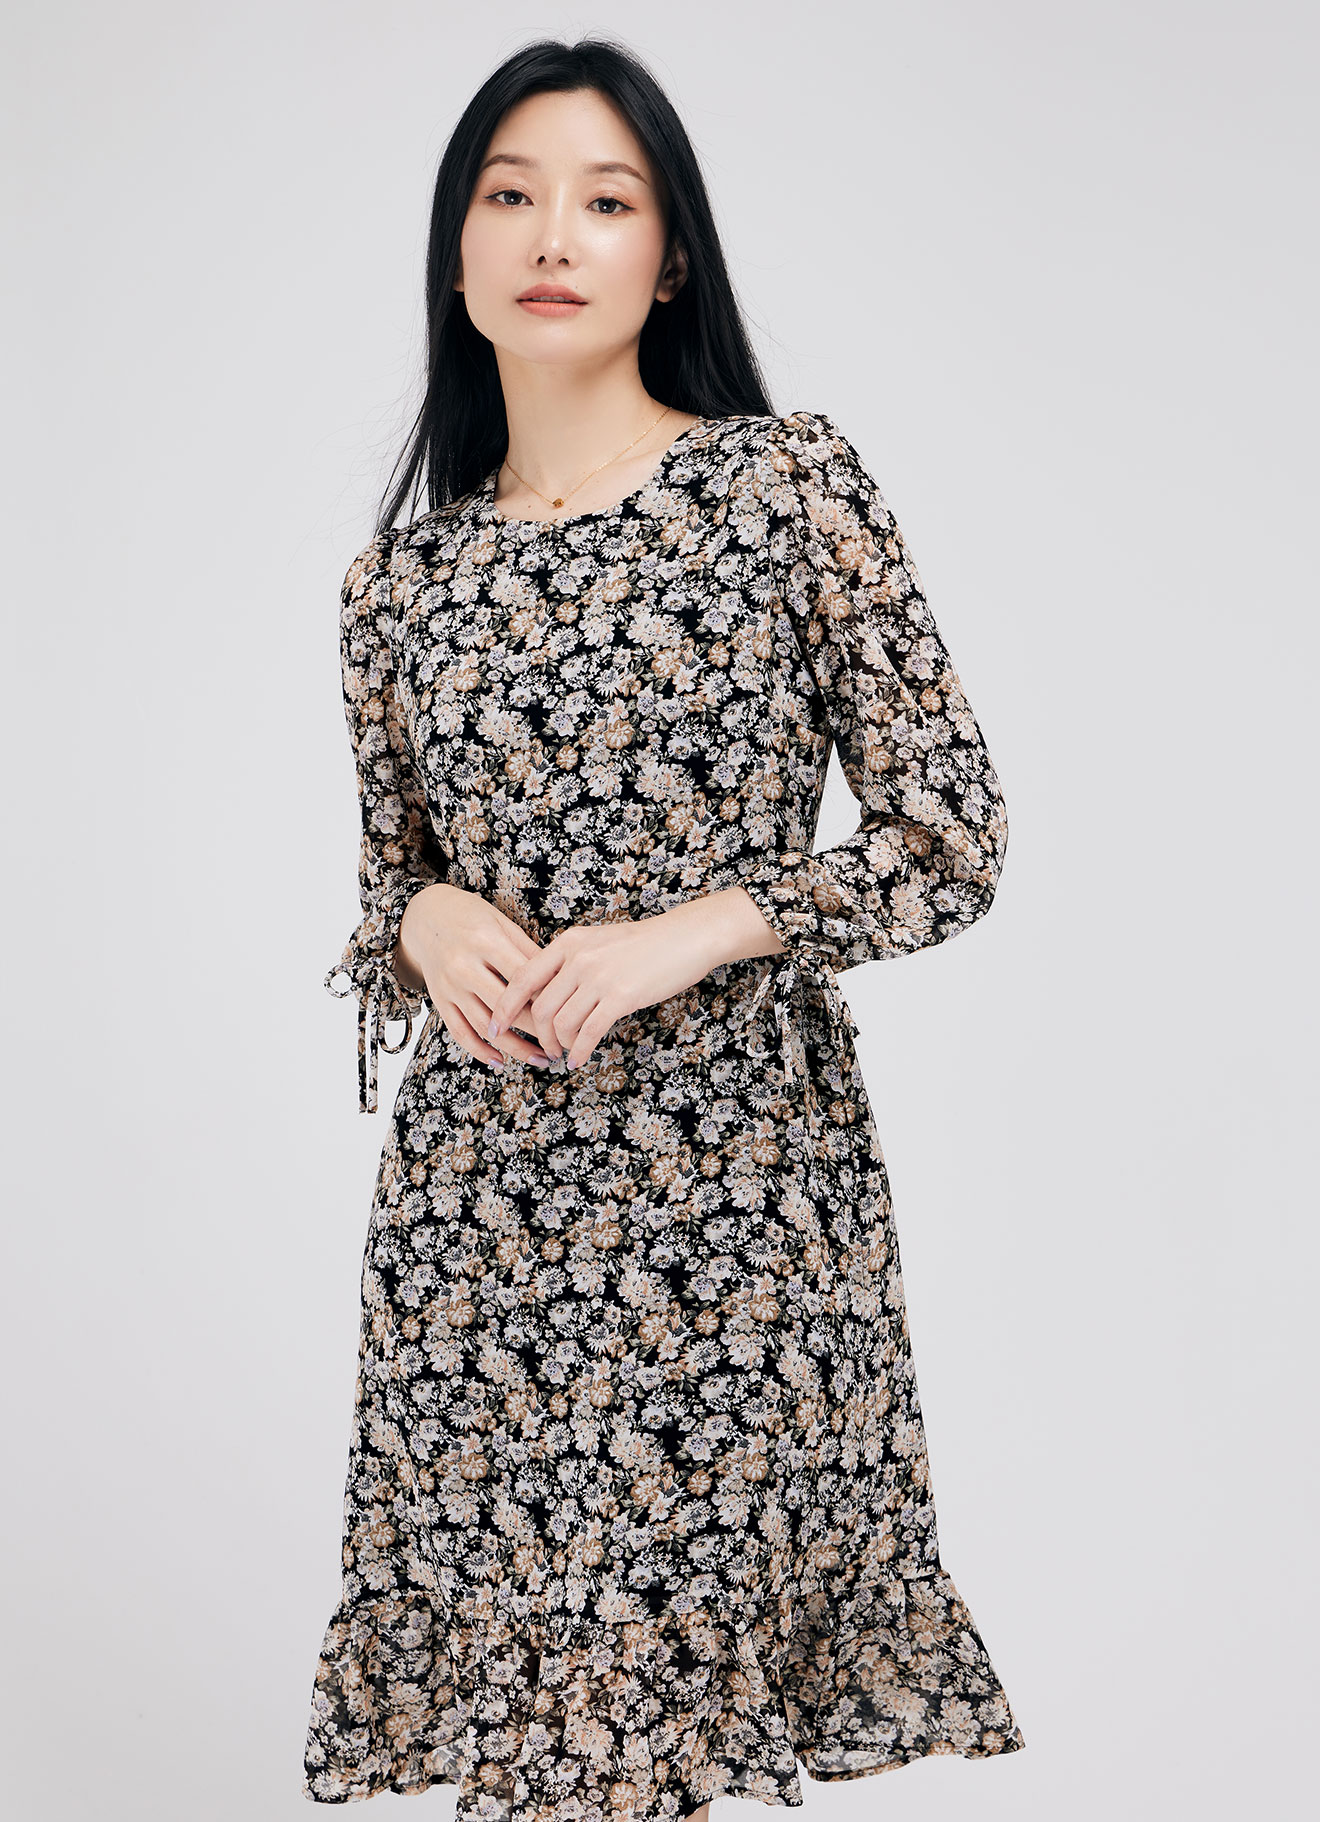 Tan by Floral Printed Dress